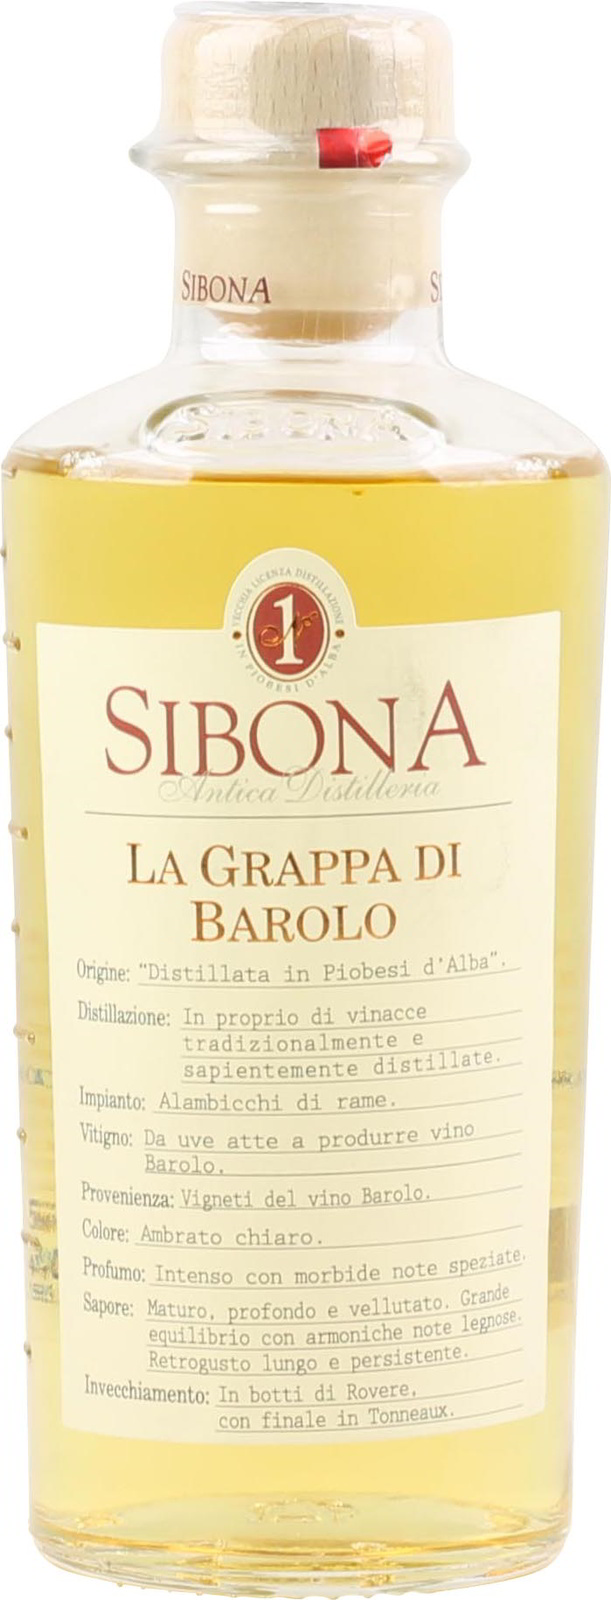 Kaufen 0,5 hier g den Barolo Sie di Sibona Grappa Liter